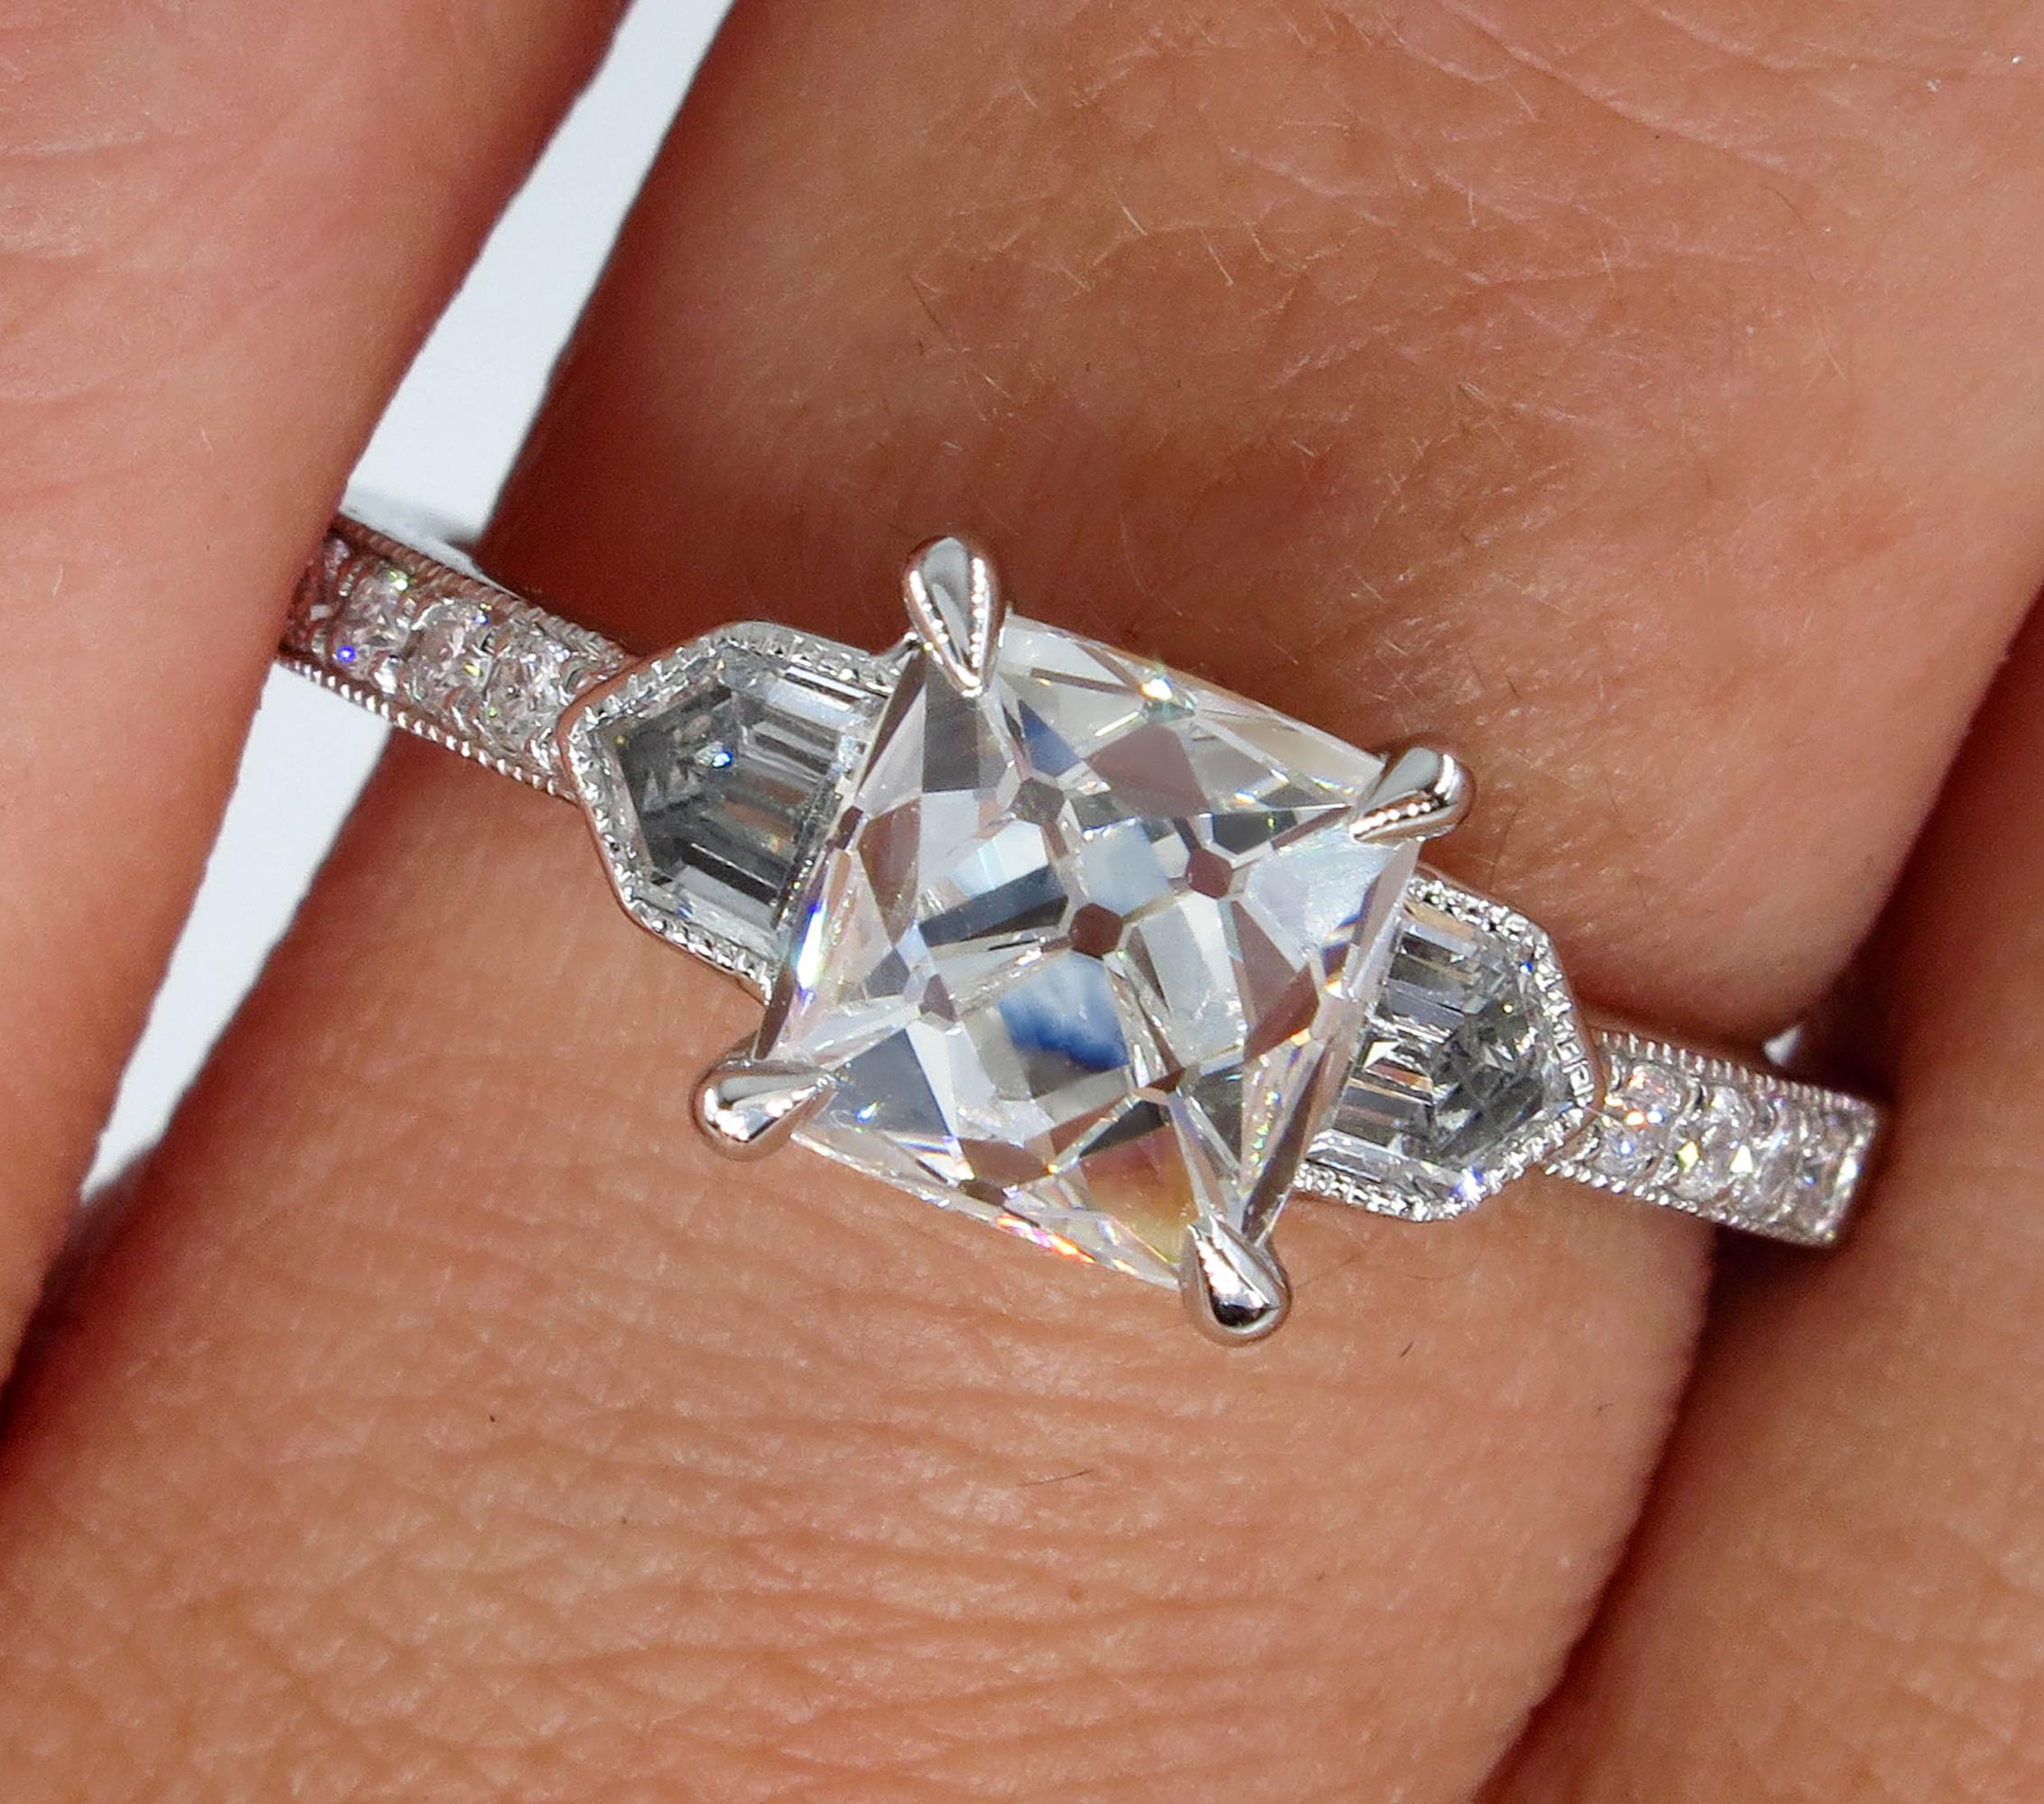 Vintage 2.07ctw French Cut GIA H-VS1 Diamond Art Deco Inspired Trilogy Engagement Platinum Ring.

This one-of-a-kind Art Deco style 3 Stone Engagement ring centers a pretty mesmerizing diamond - GIA certified 1.60 carat antique French cut diamond,
J